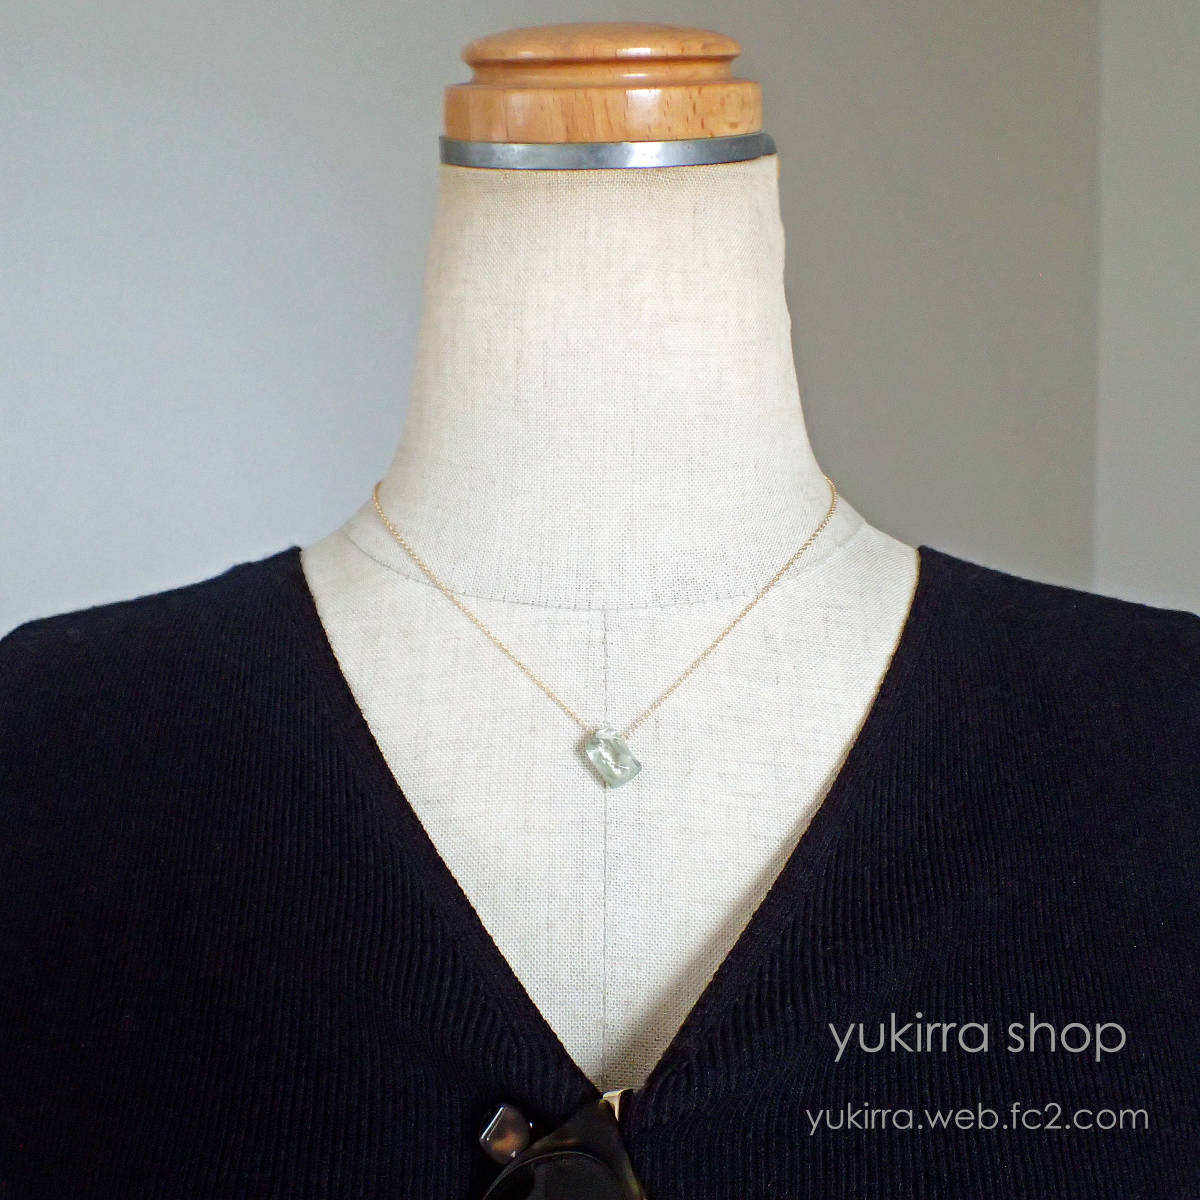 *yukirra shop* green amethyst. one bead necklace 